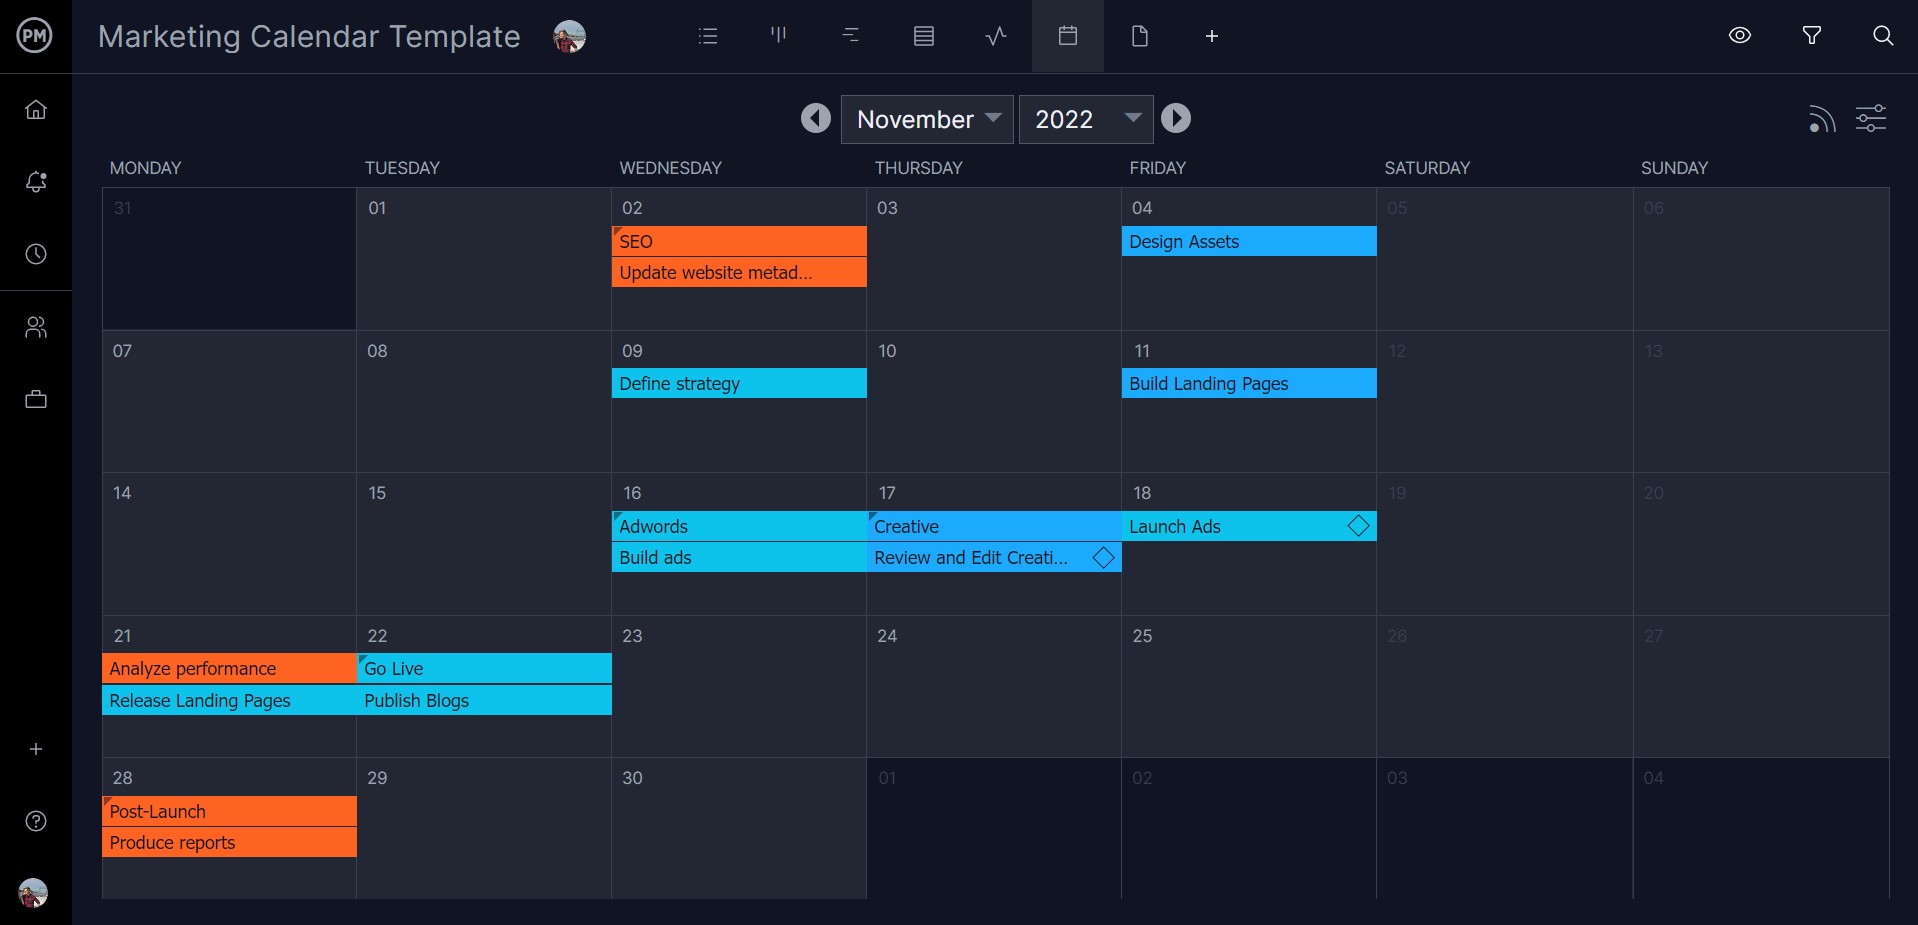 ProjectManager's calendar view